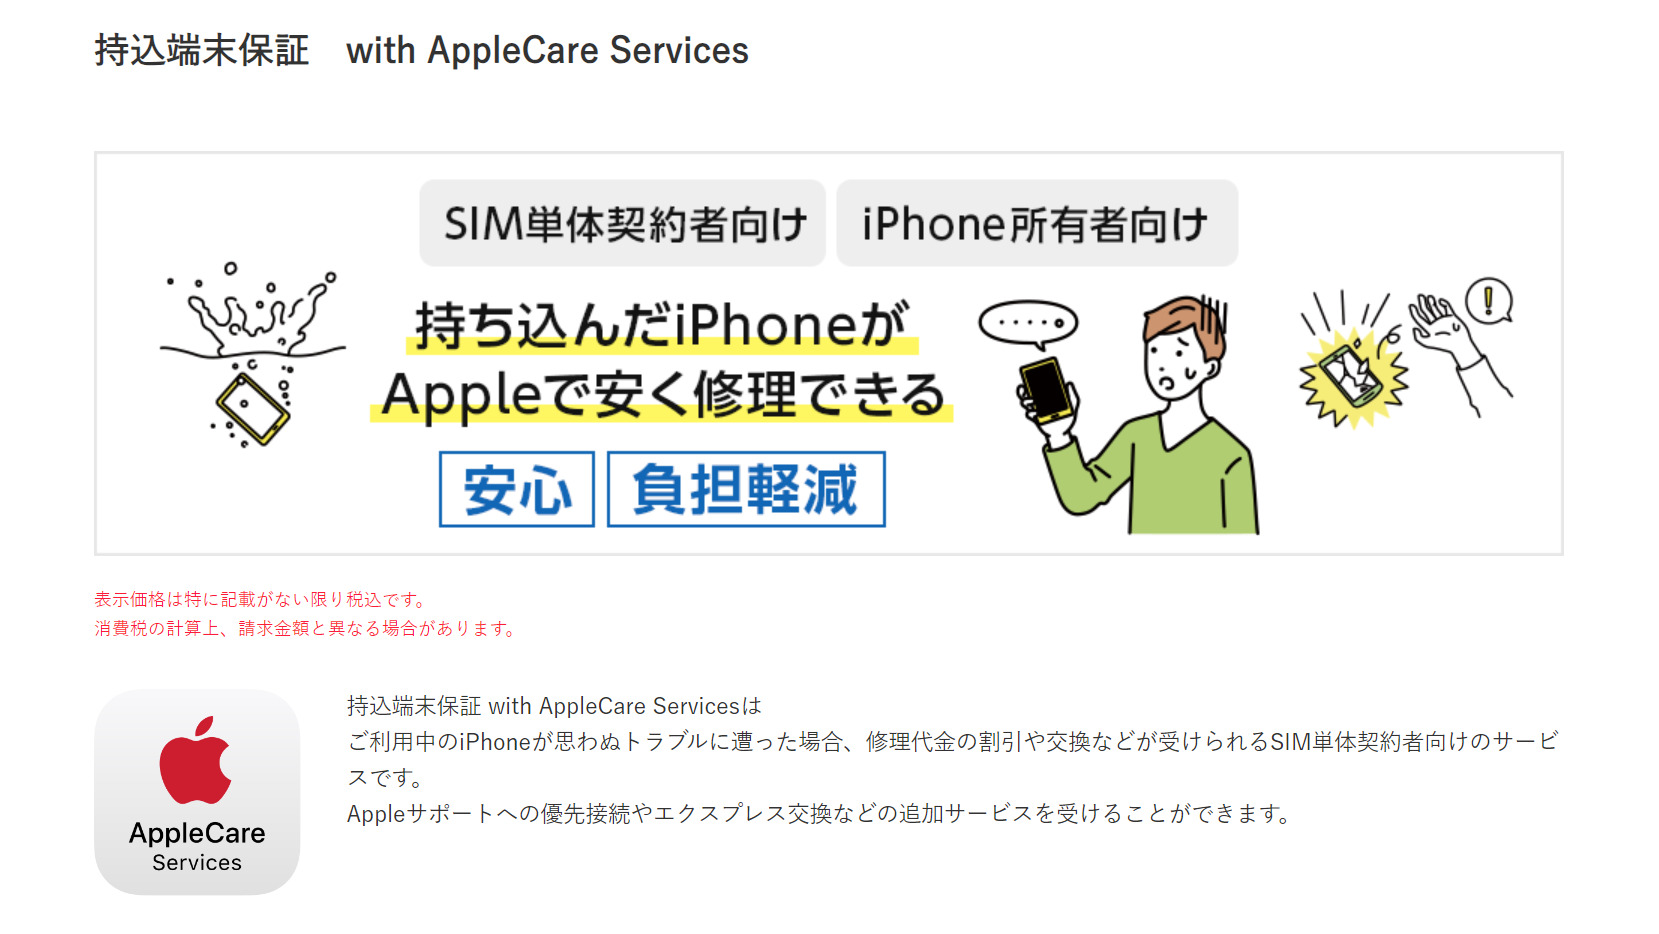 持込端末保証 with AppleCare Services